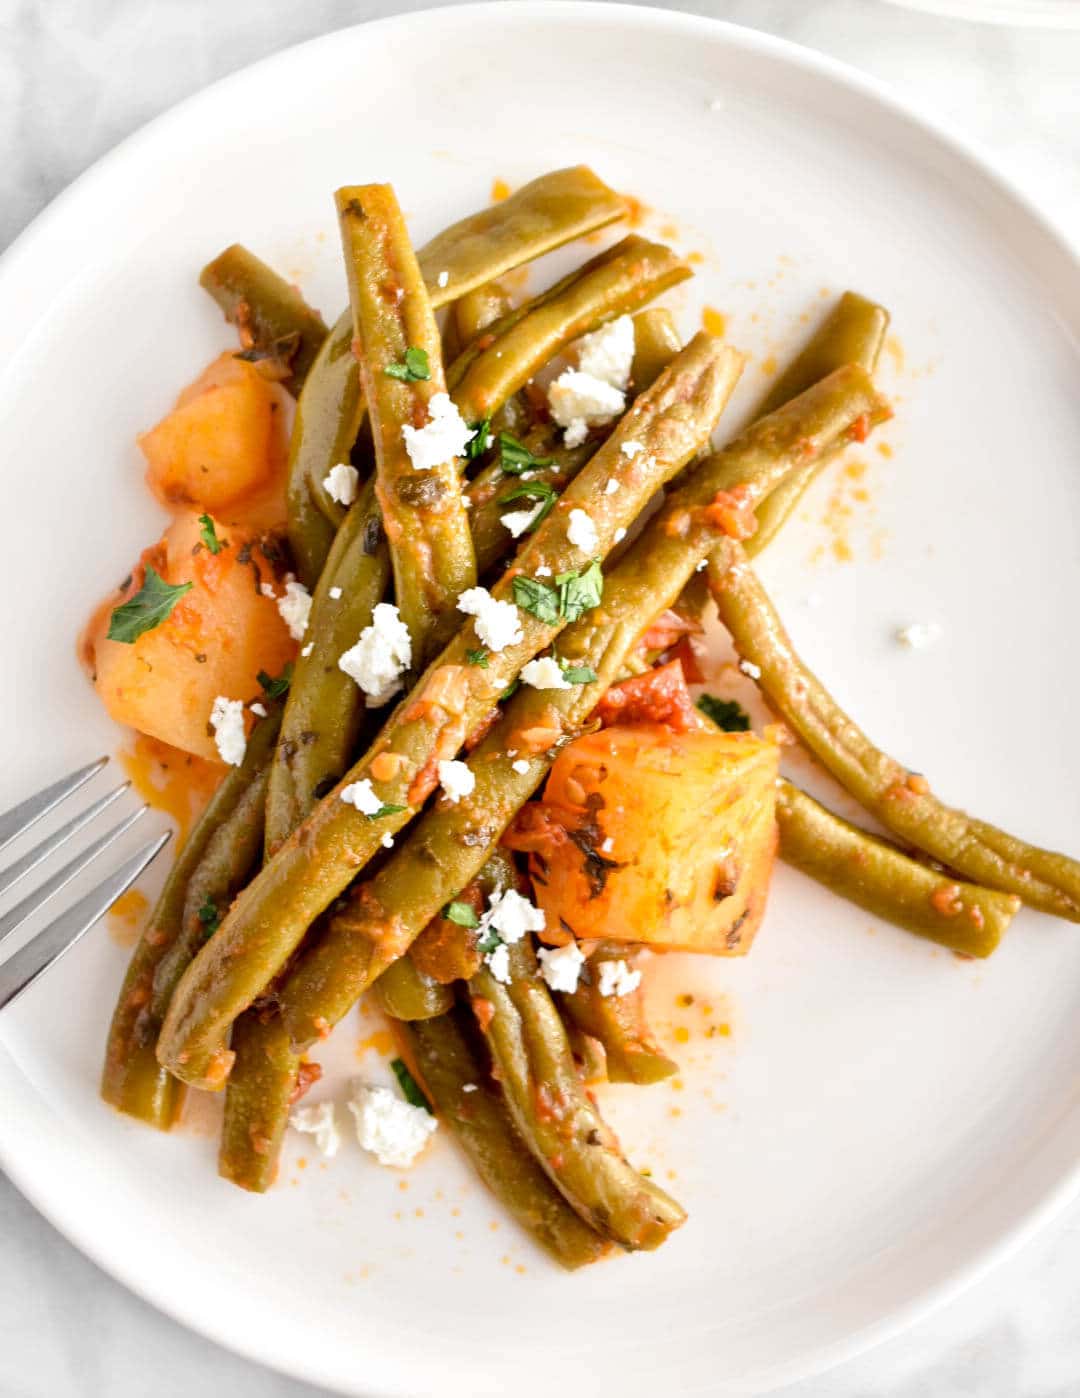 Fasolakia, Greek slow cooker green beans, on a plate.